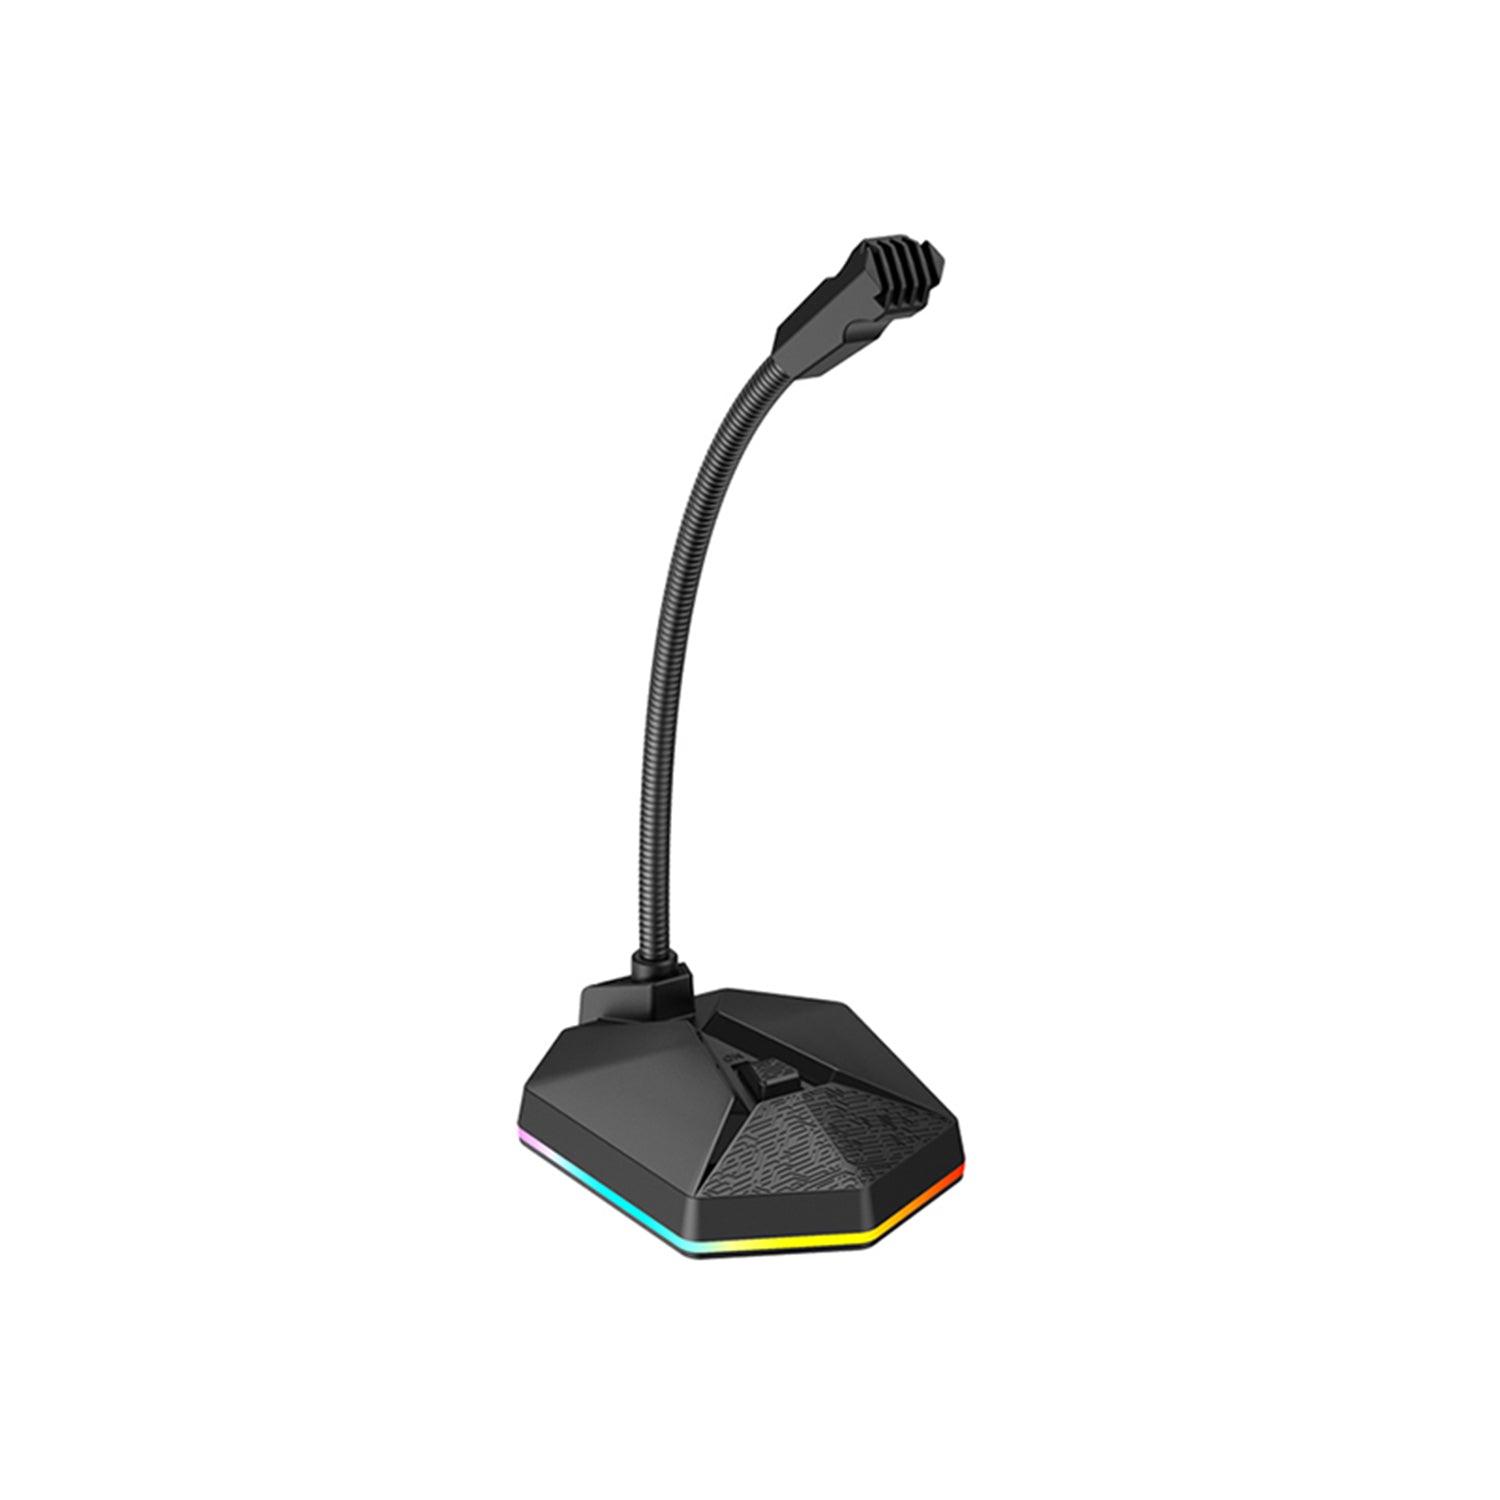 HAVIT GK57 USB Computer Microphone with RGB Gaming Light & Adjustable Neck